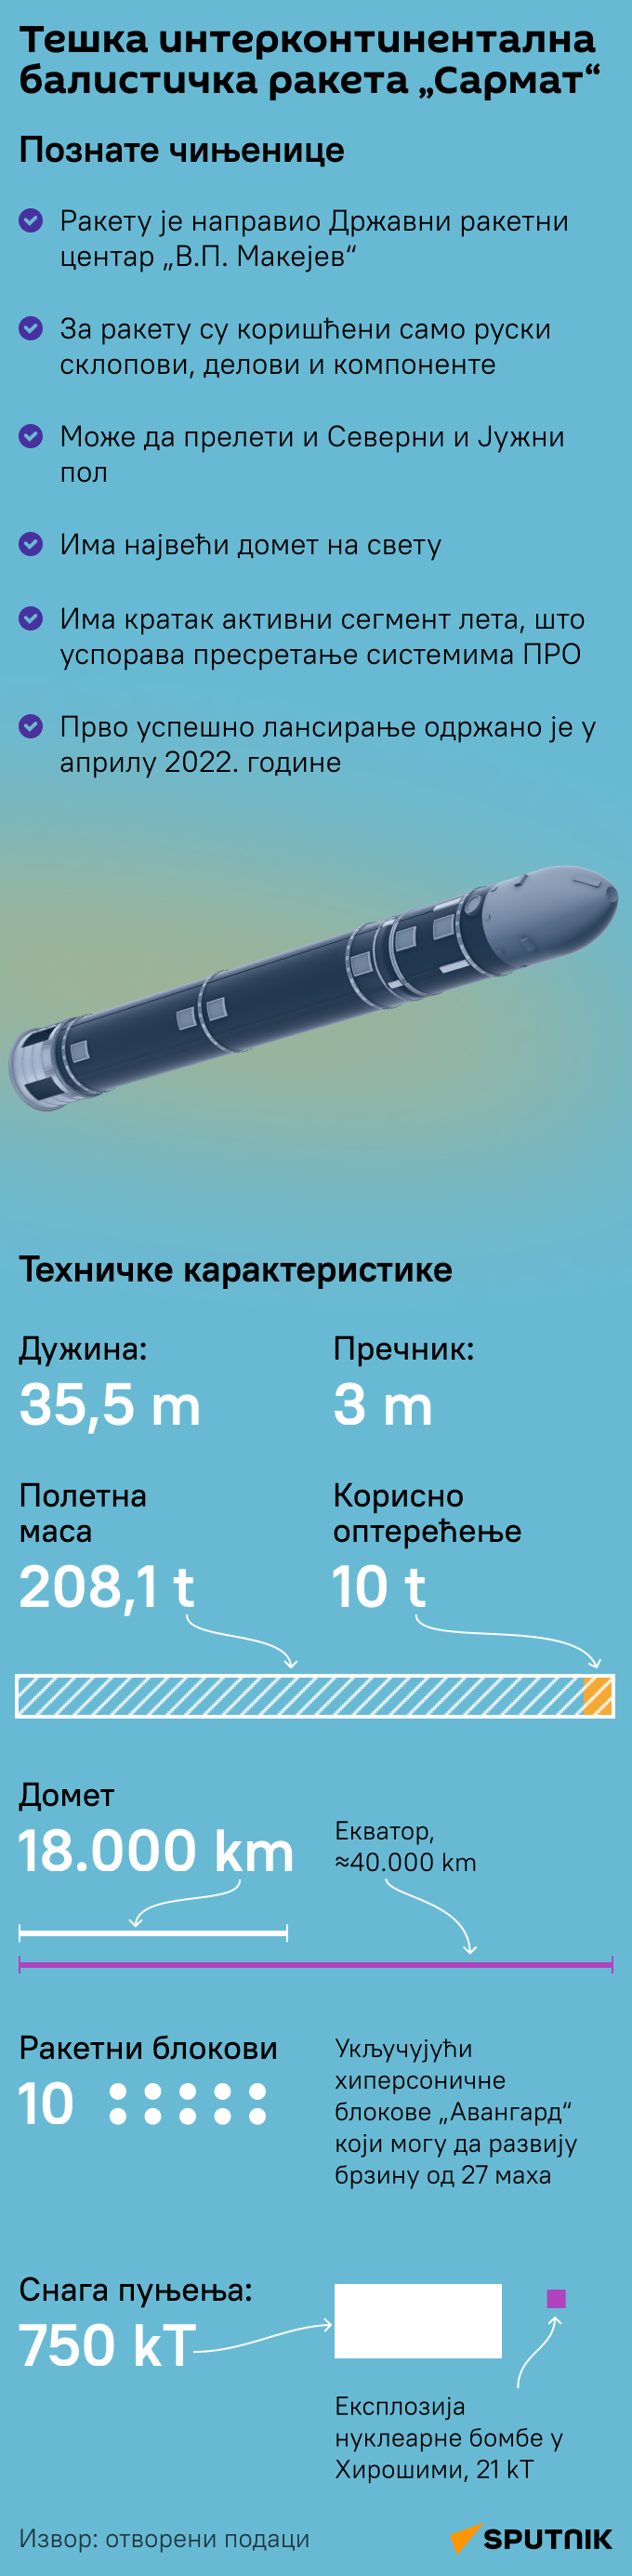 Инфографика Тешка ракета Сармат ЋИРИЛИЦА моб - Sputnik Србија